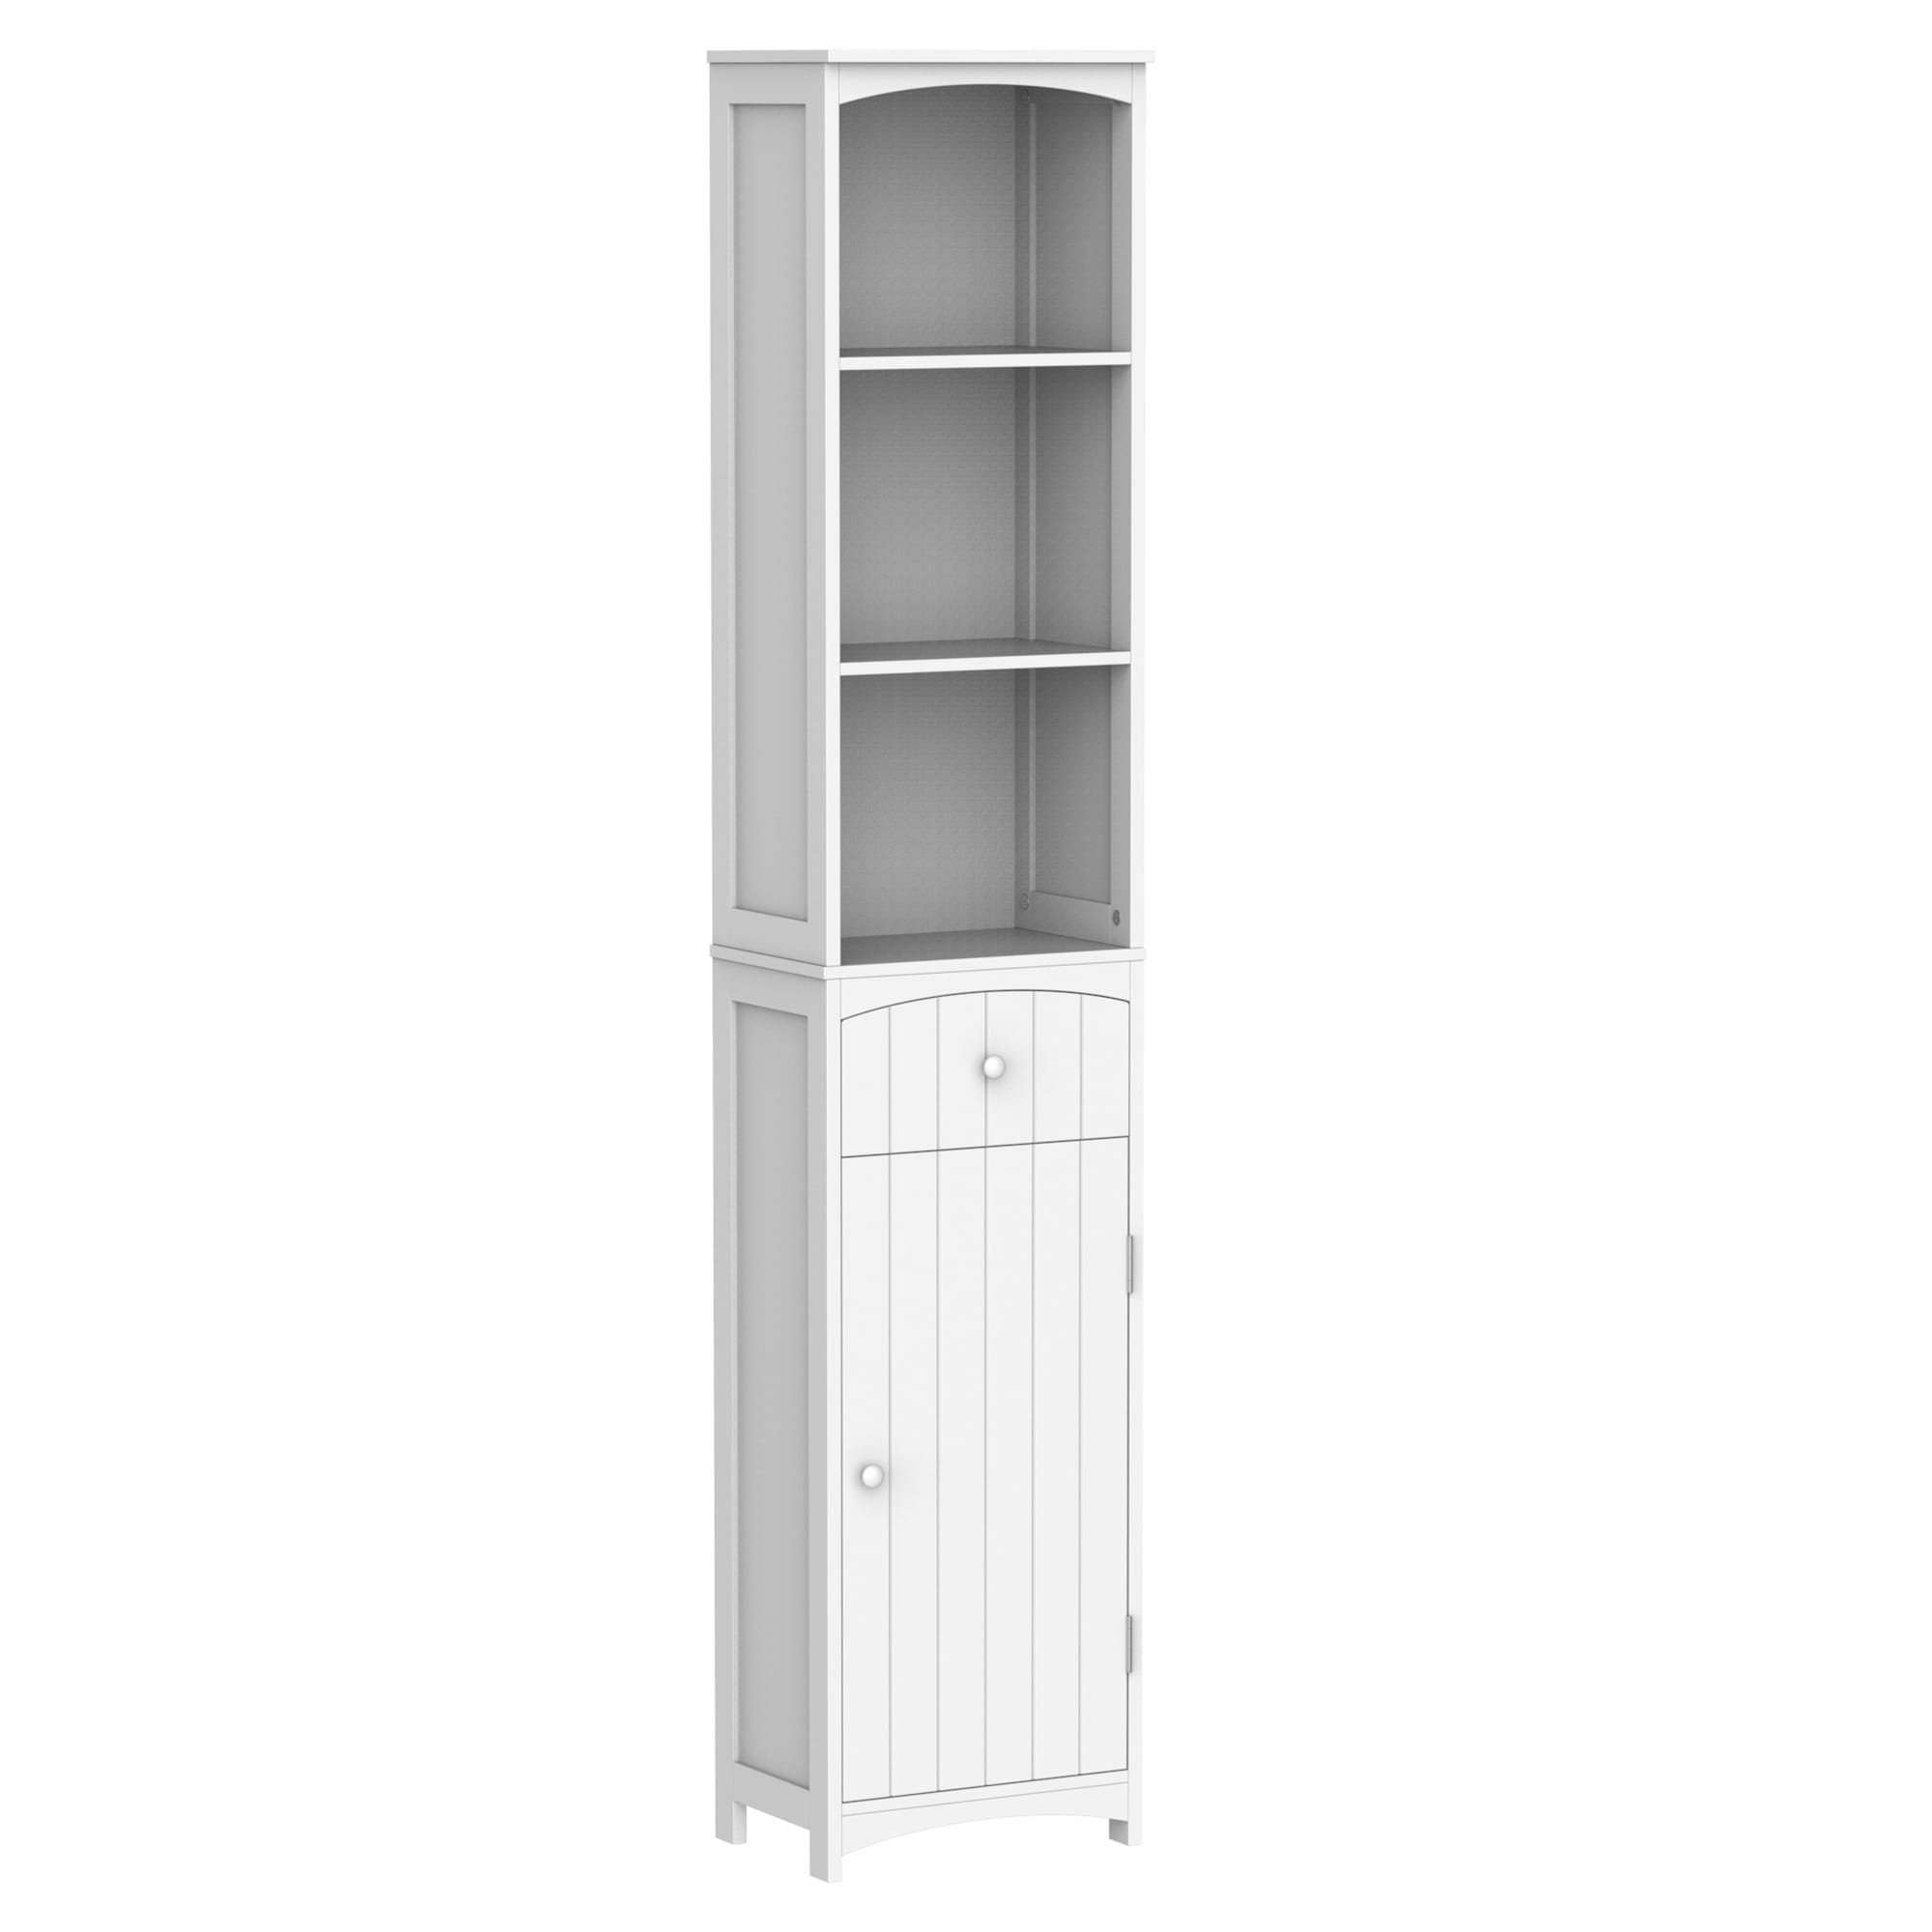 Linen Tower Bathroom Storage Cabinet Tall Slim Side Organizer with